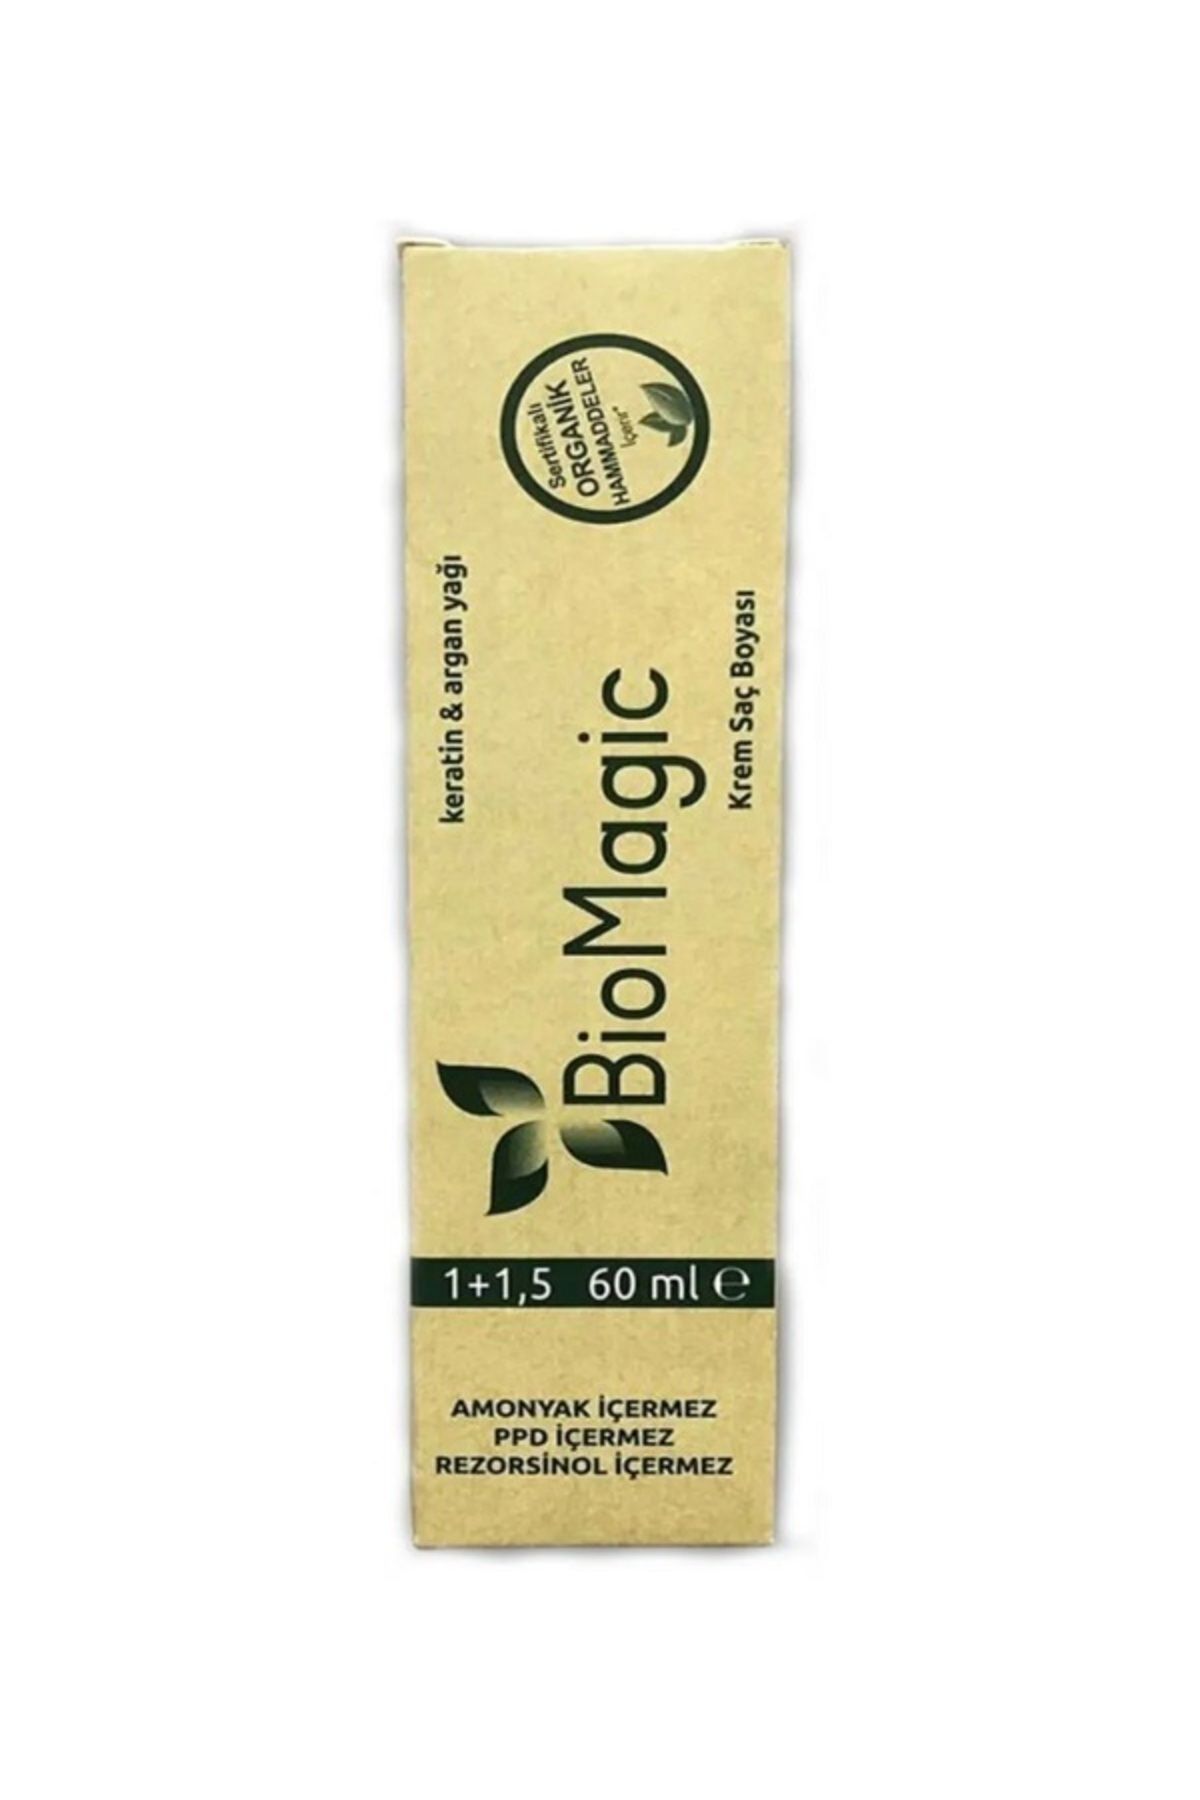 BioMagic Papatya Saç Boyası 60ml -9.03 +Mini Oksidan..ORGANİK0605242